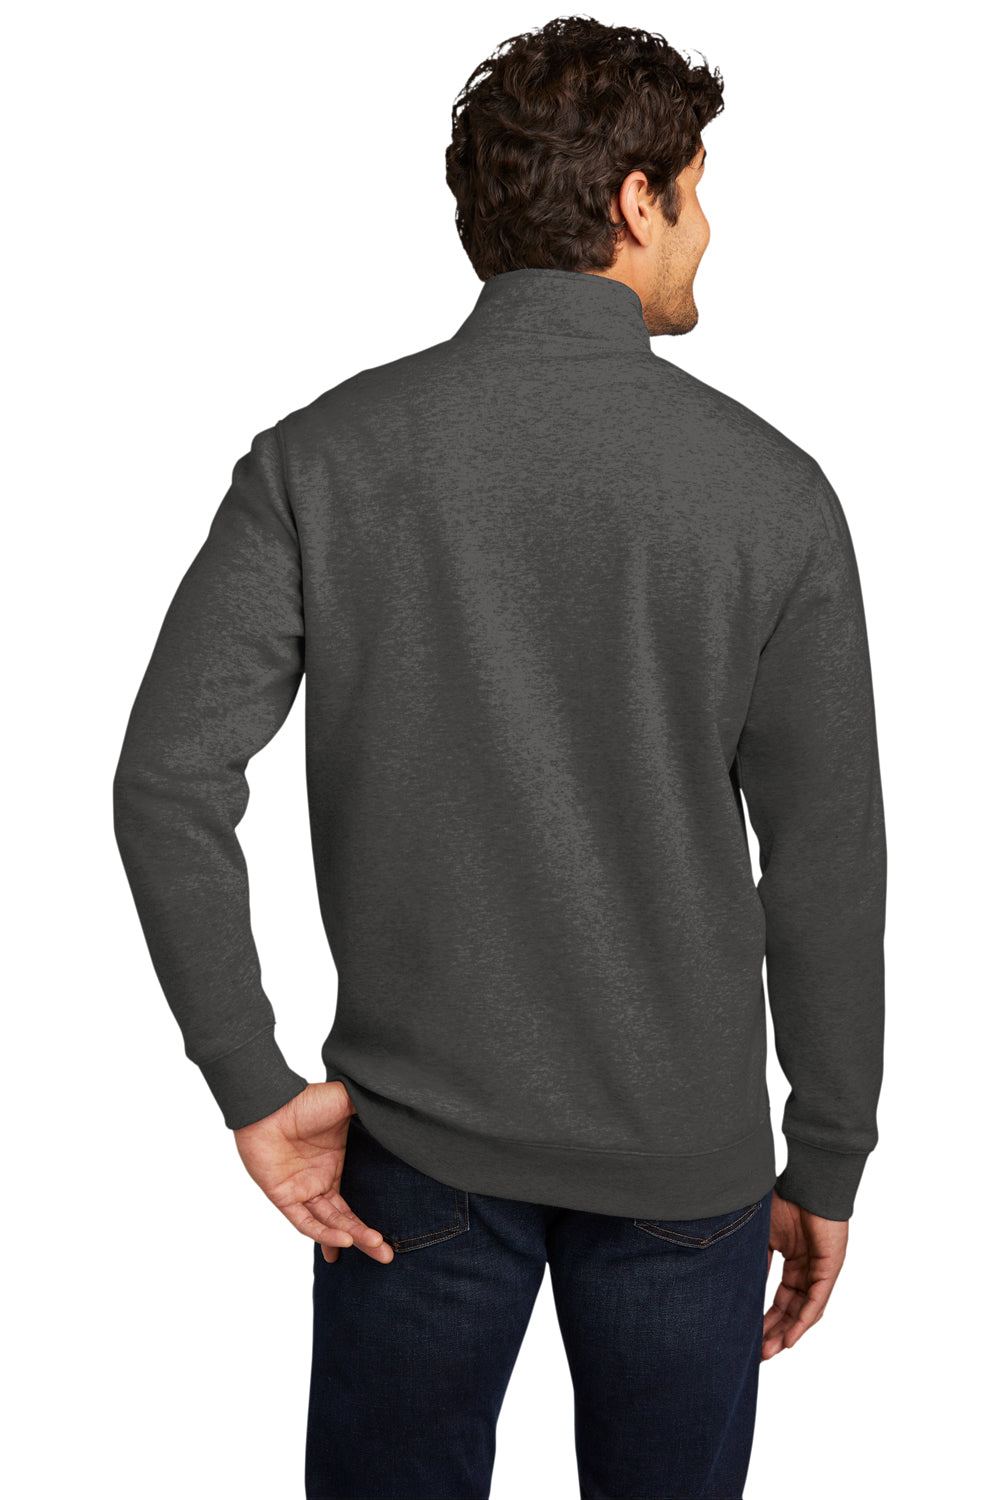 District Mens Very Important 1/4 Zip Sweatshirt Heather Charcoal Grey Side